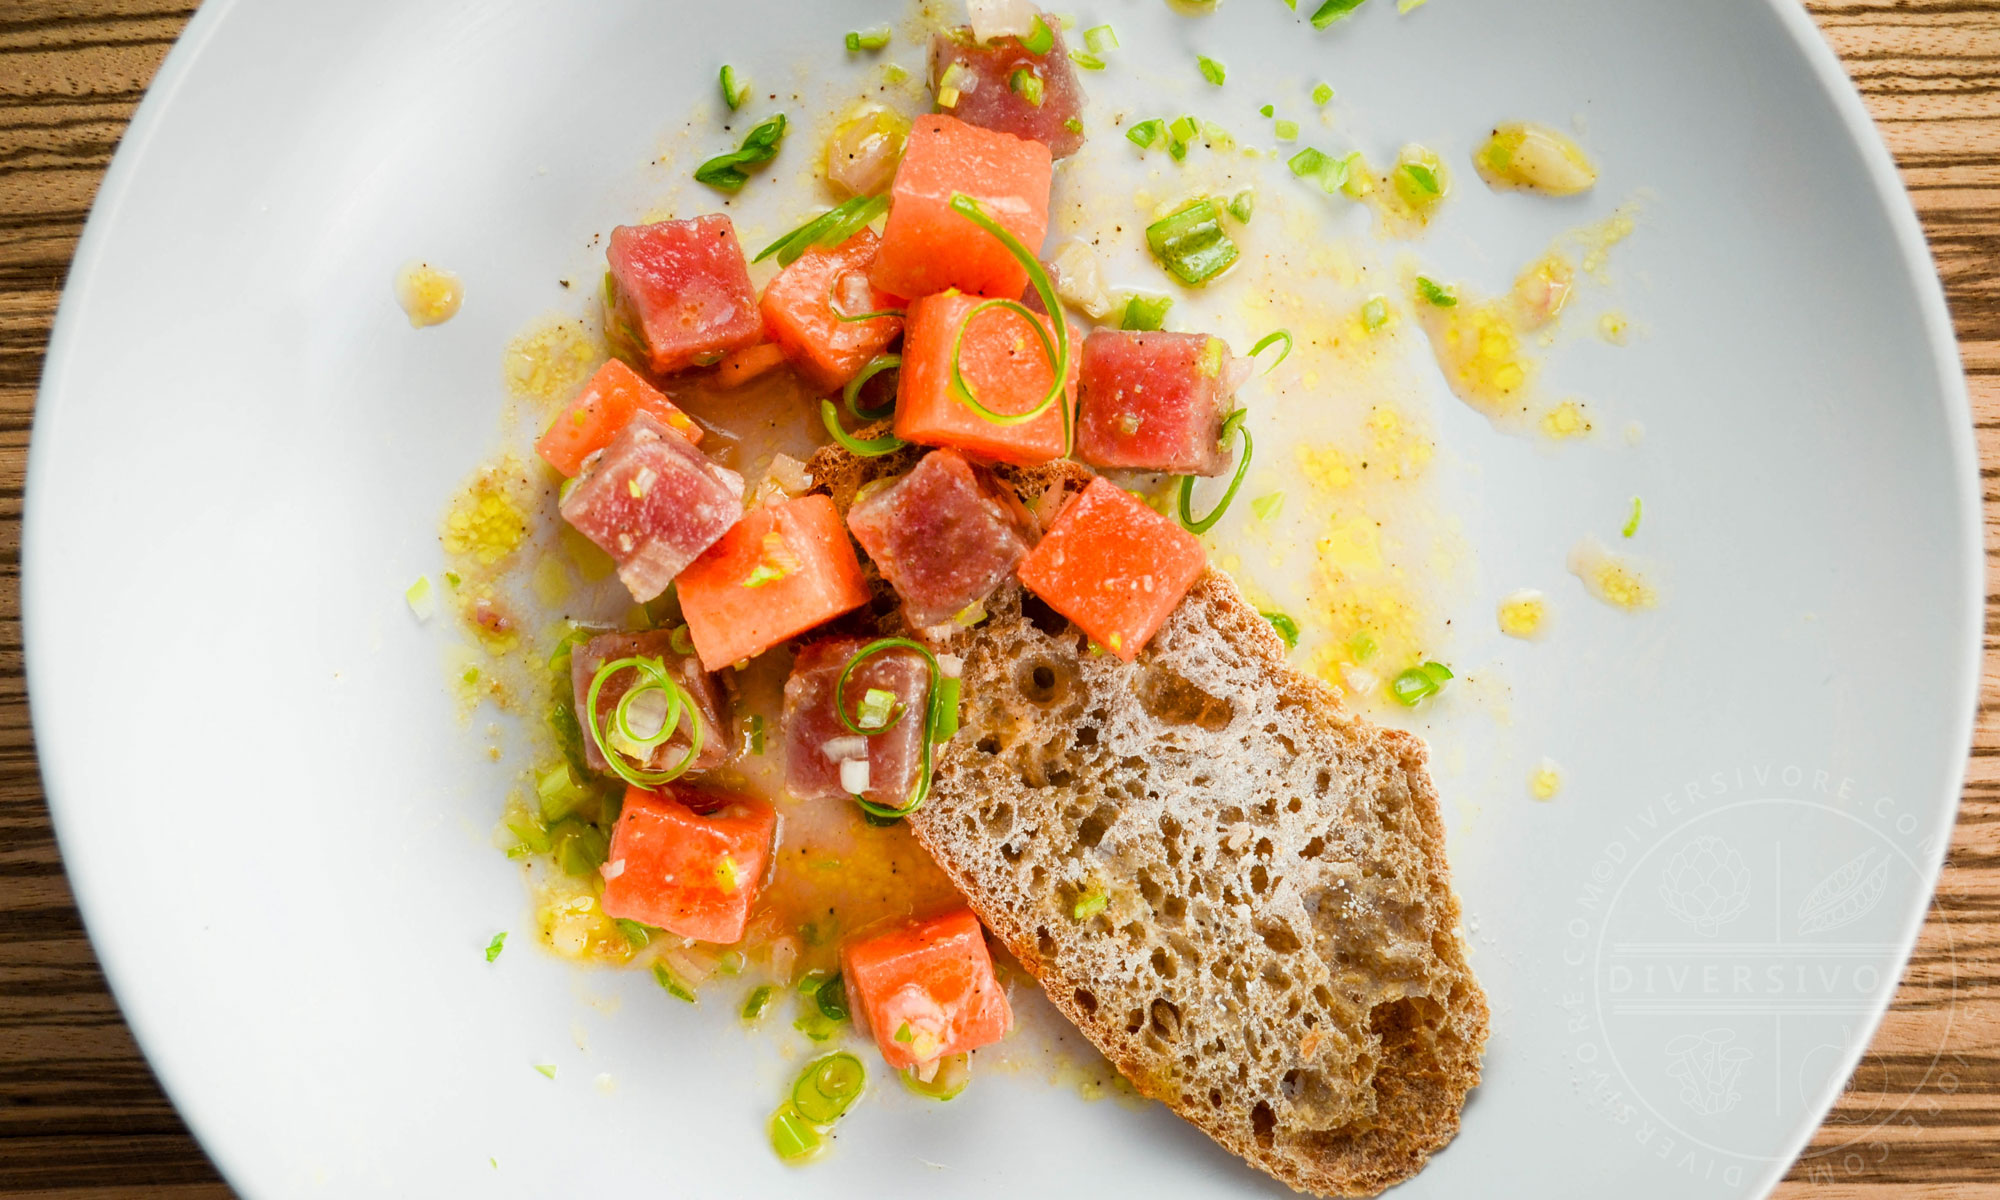 Watermelon and tuna crudo with olive oil on whole wheat bread